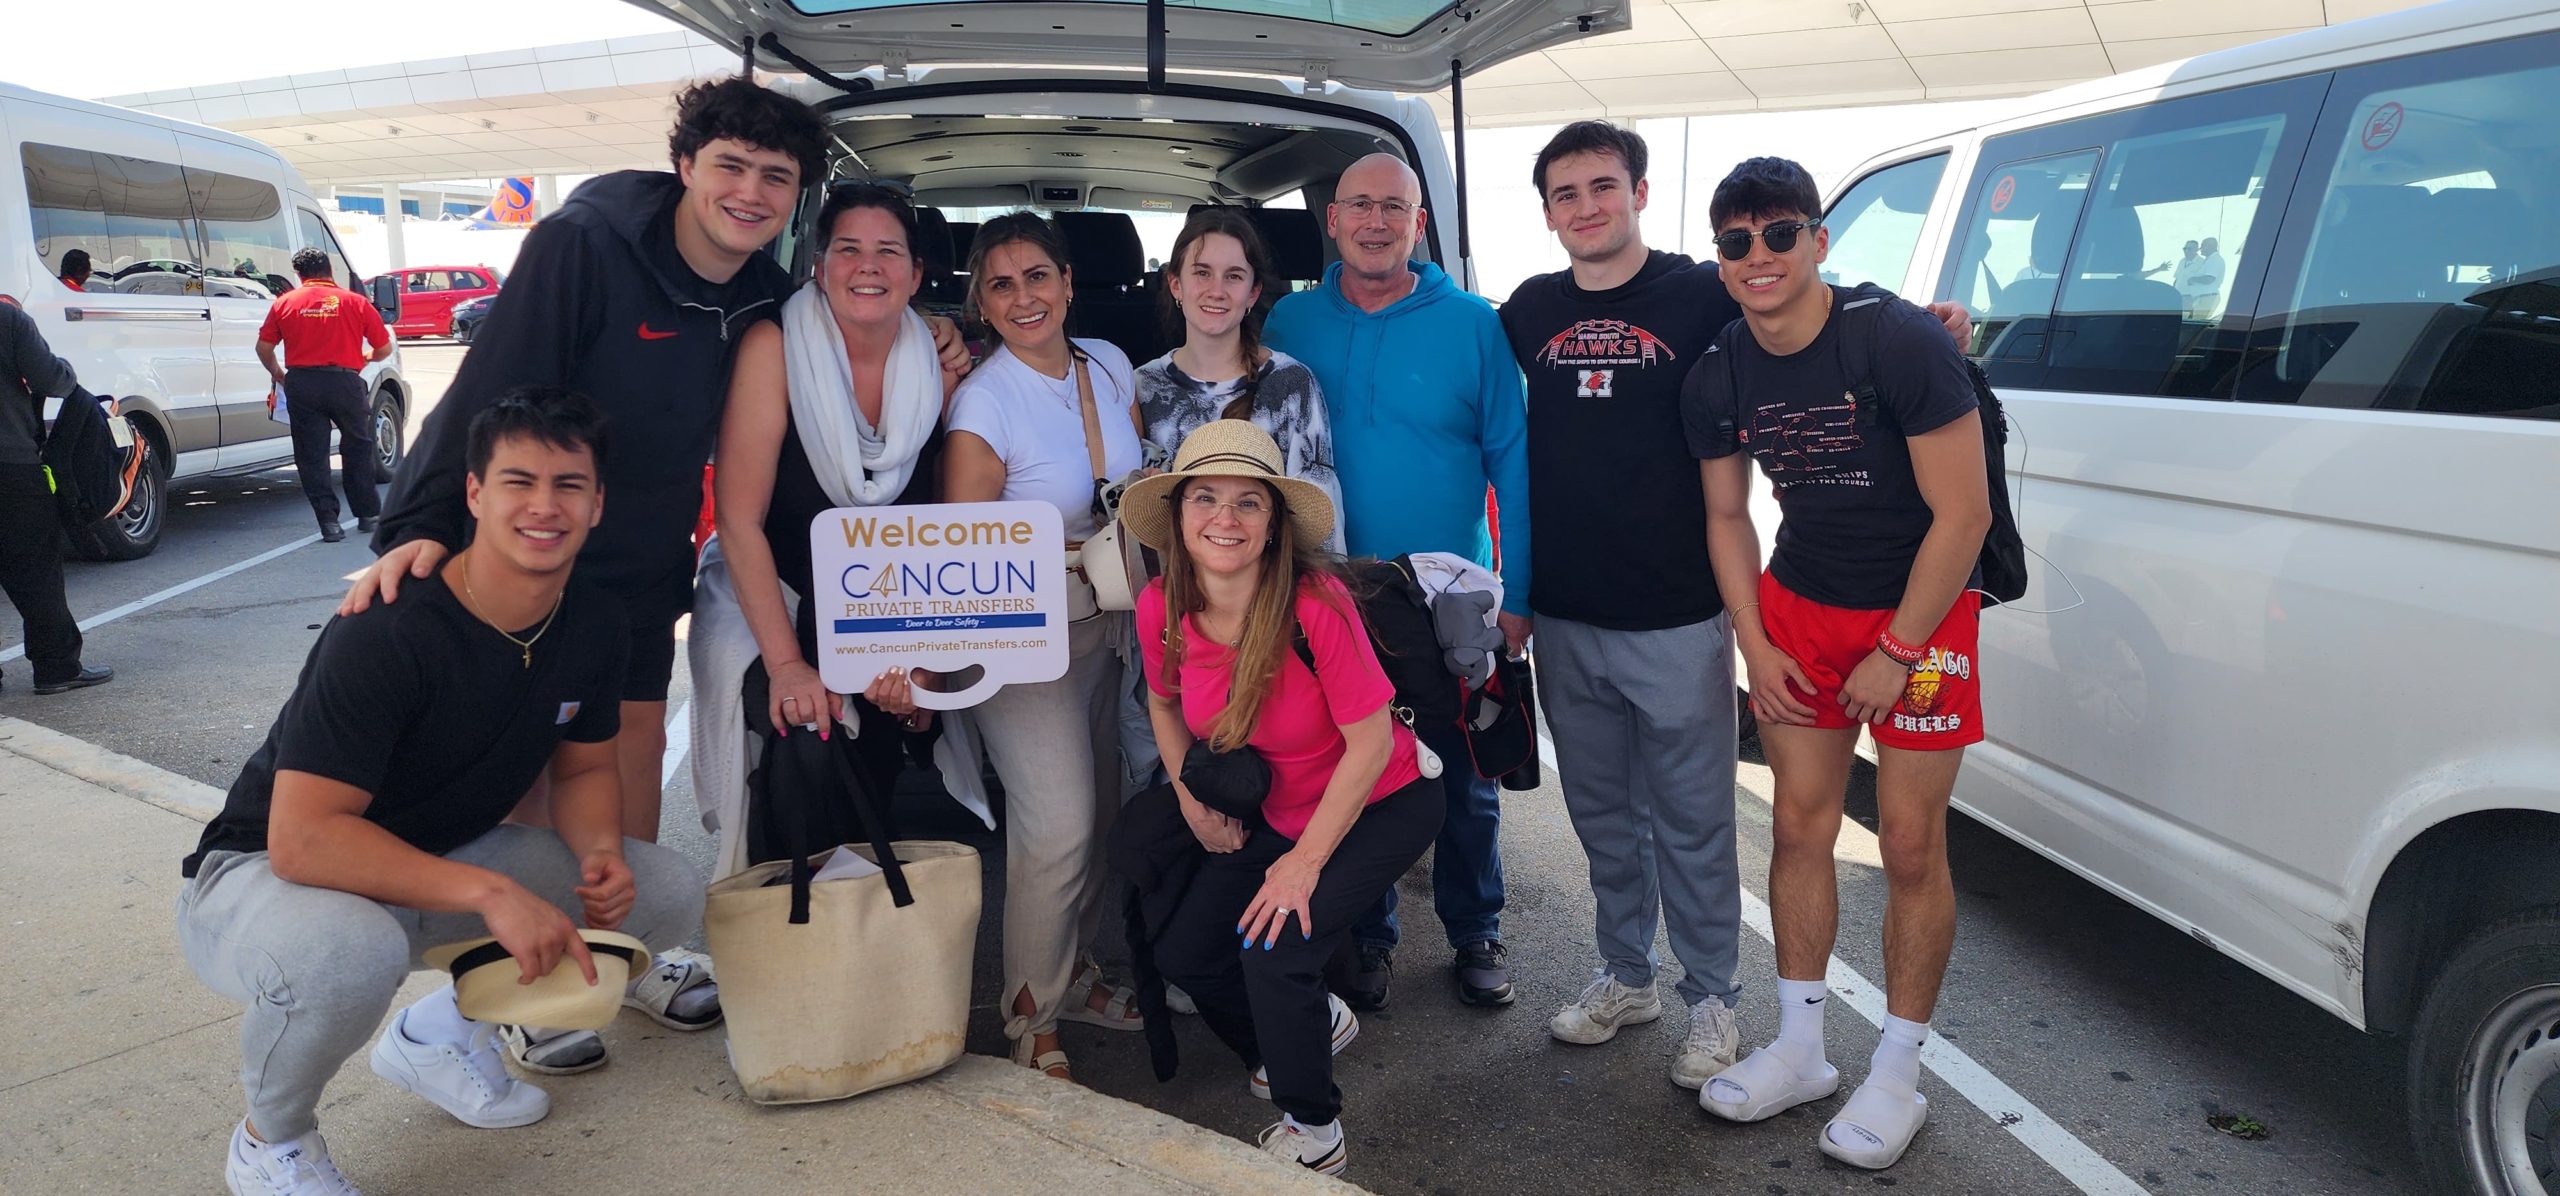 Cancun airport transportation to riu playacar playa del carmen